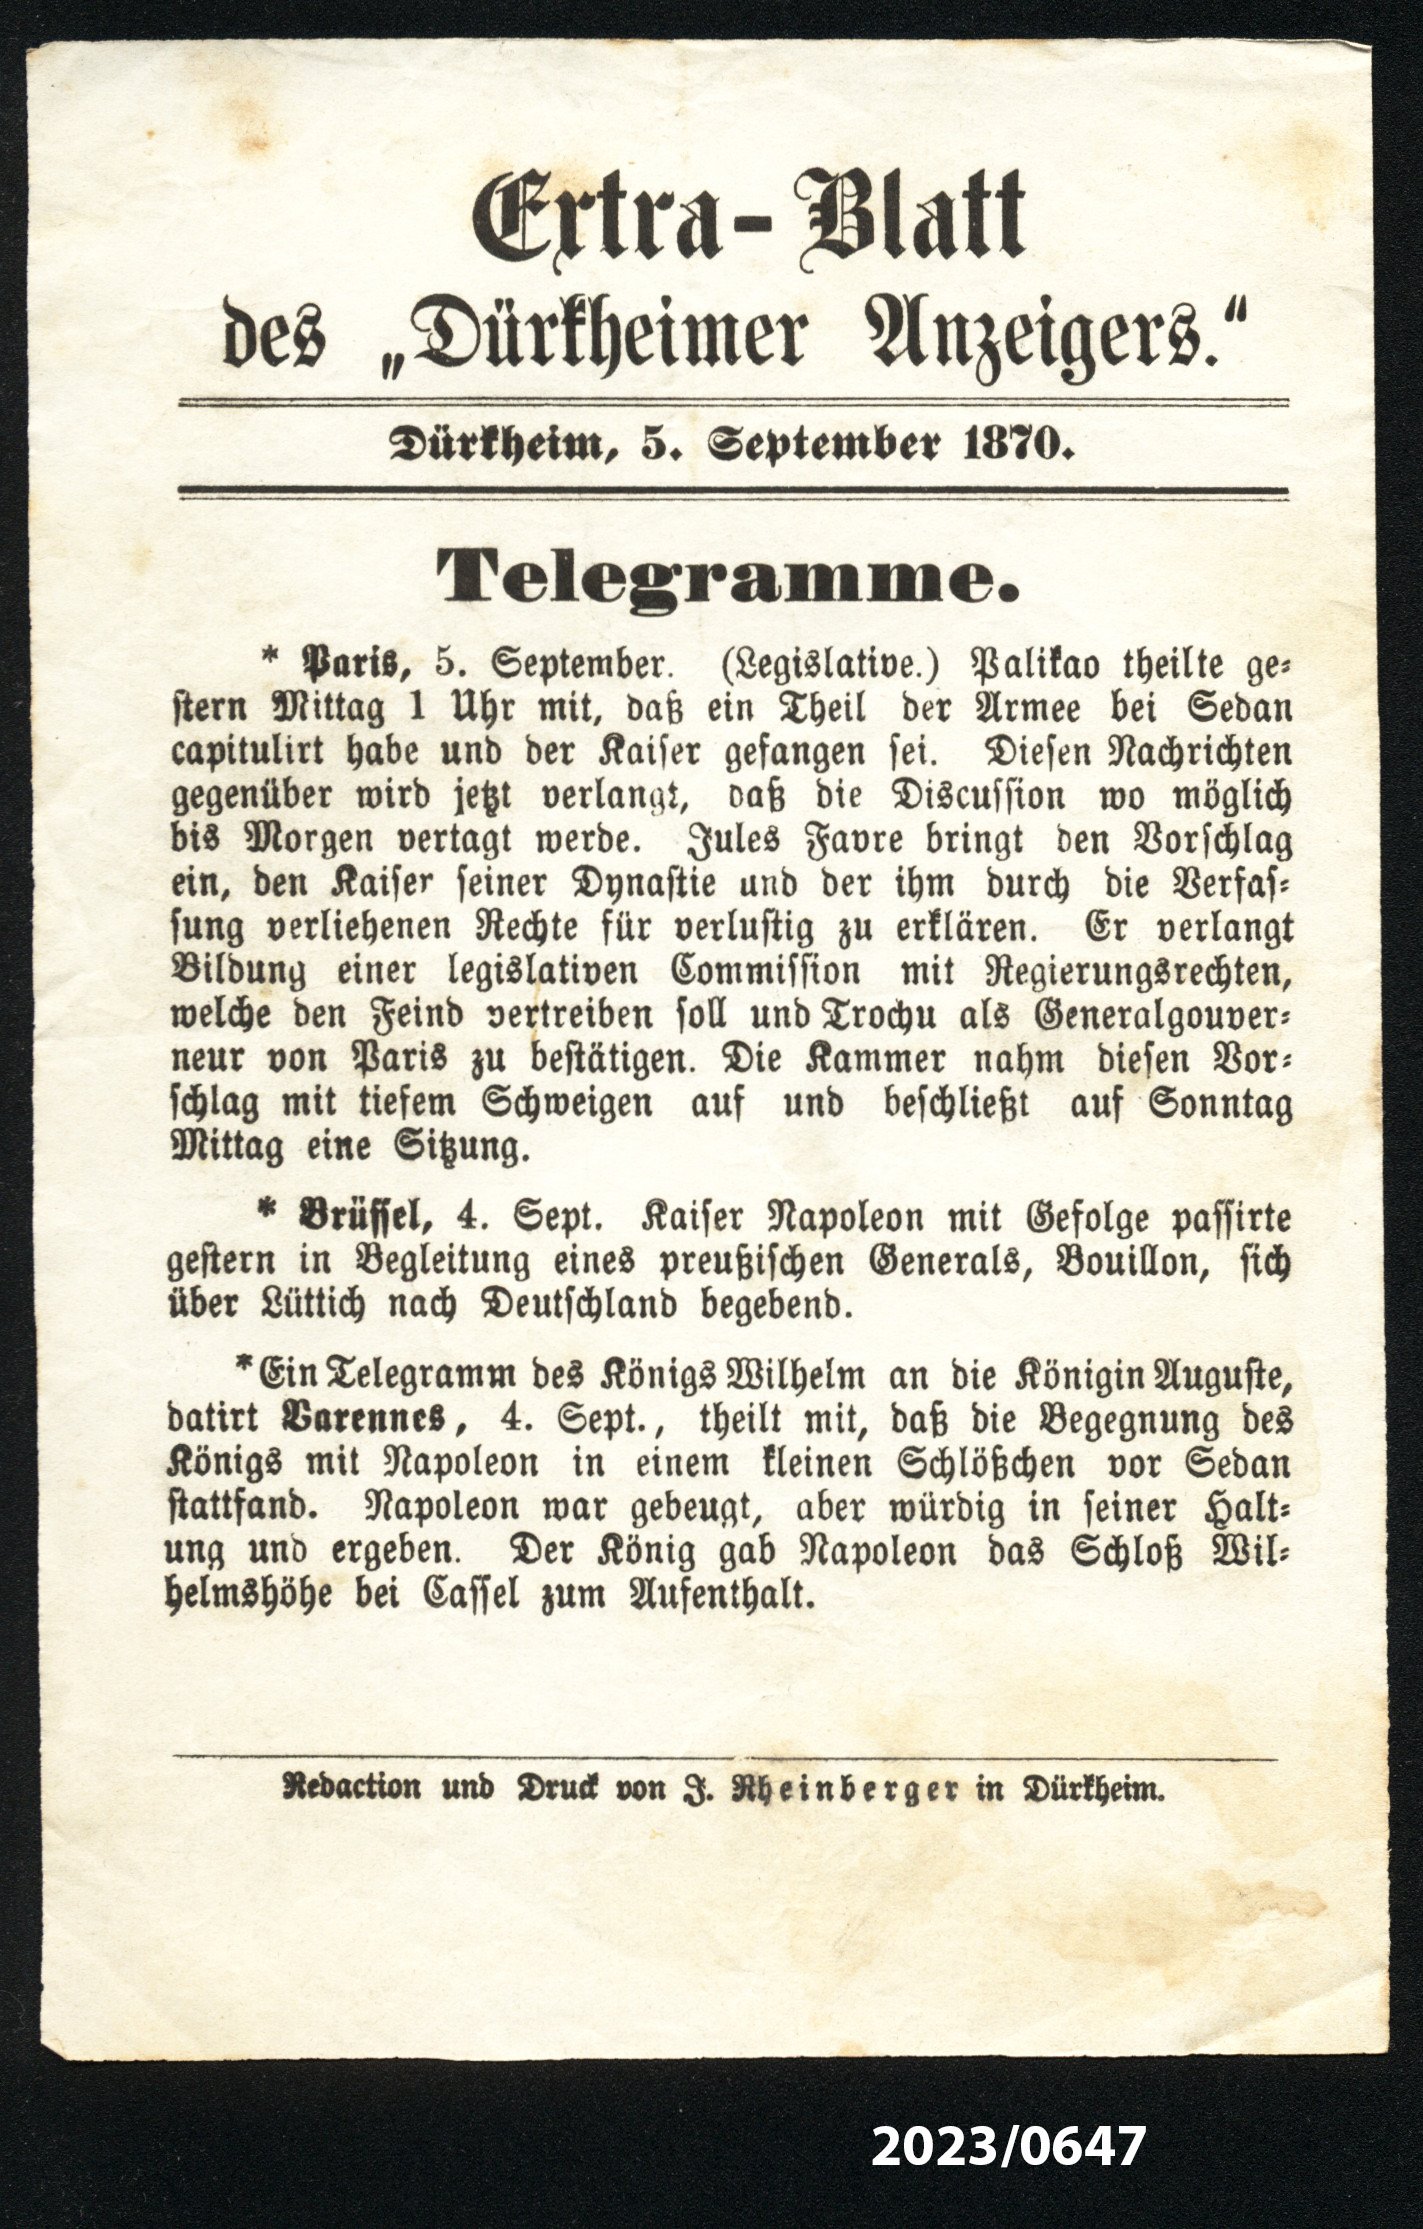 Extra-Blatt des "Dürkheimer Anzeigers." 5.9.1870 (Stadtmuseum Bad Dürkheim im Kulturzentrum Haus Catoir CC BY-NC-SA)